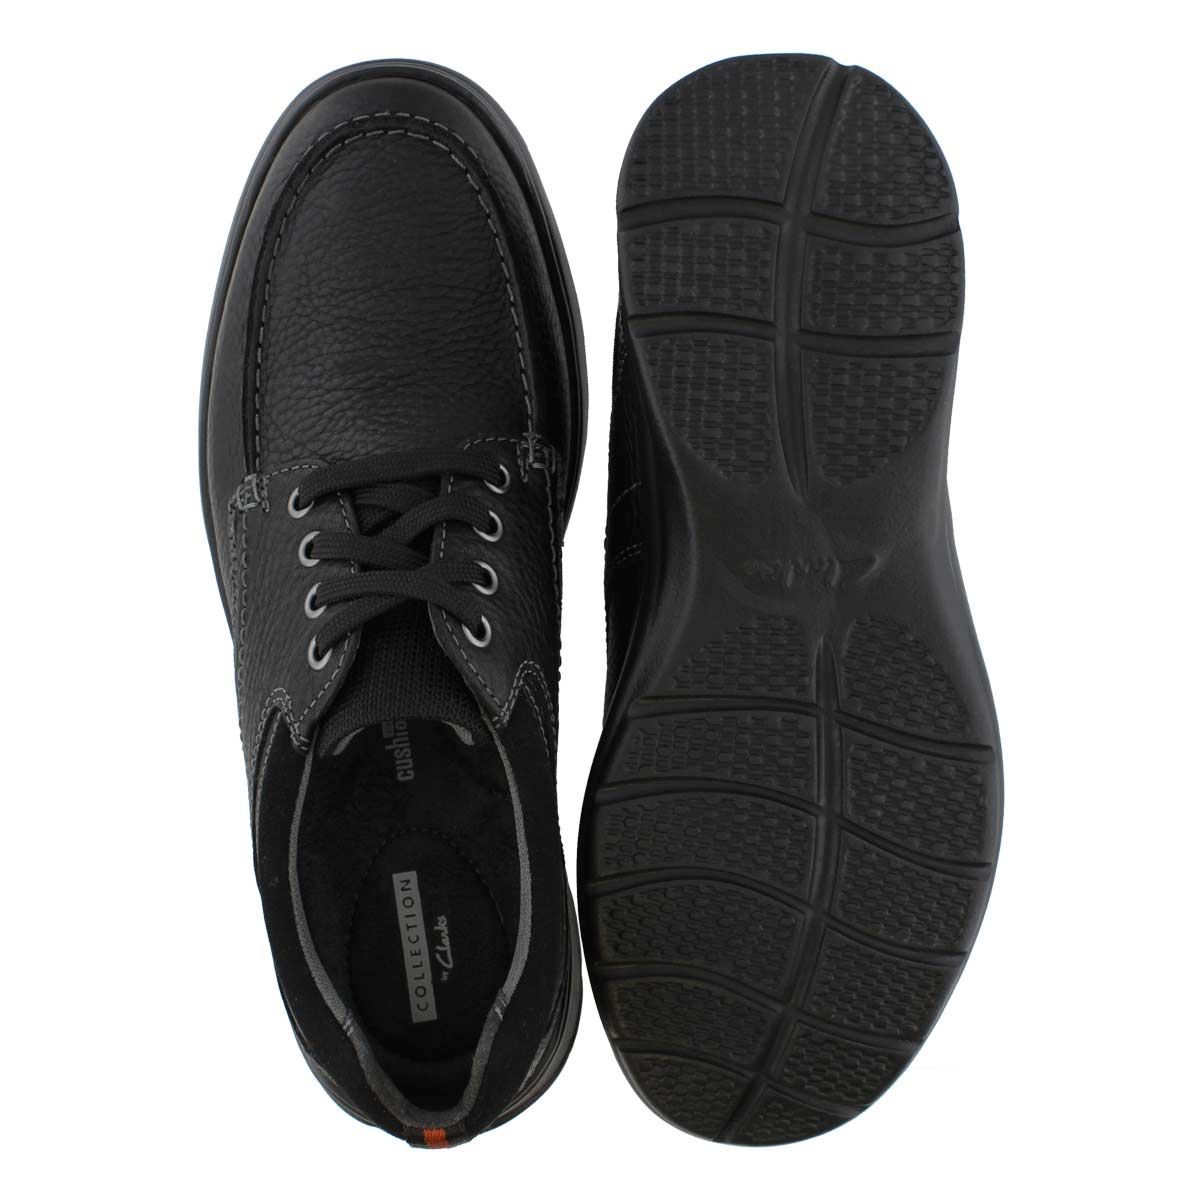 Clarks Men's COTRELL EDGE black lace up shoes | SoftMoc.com